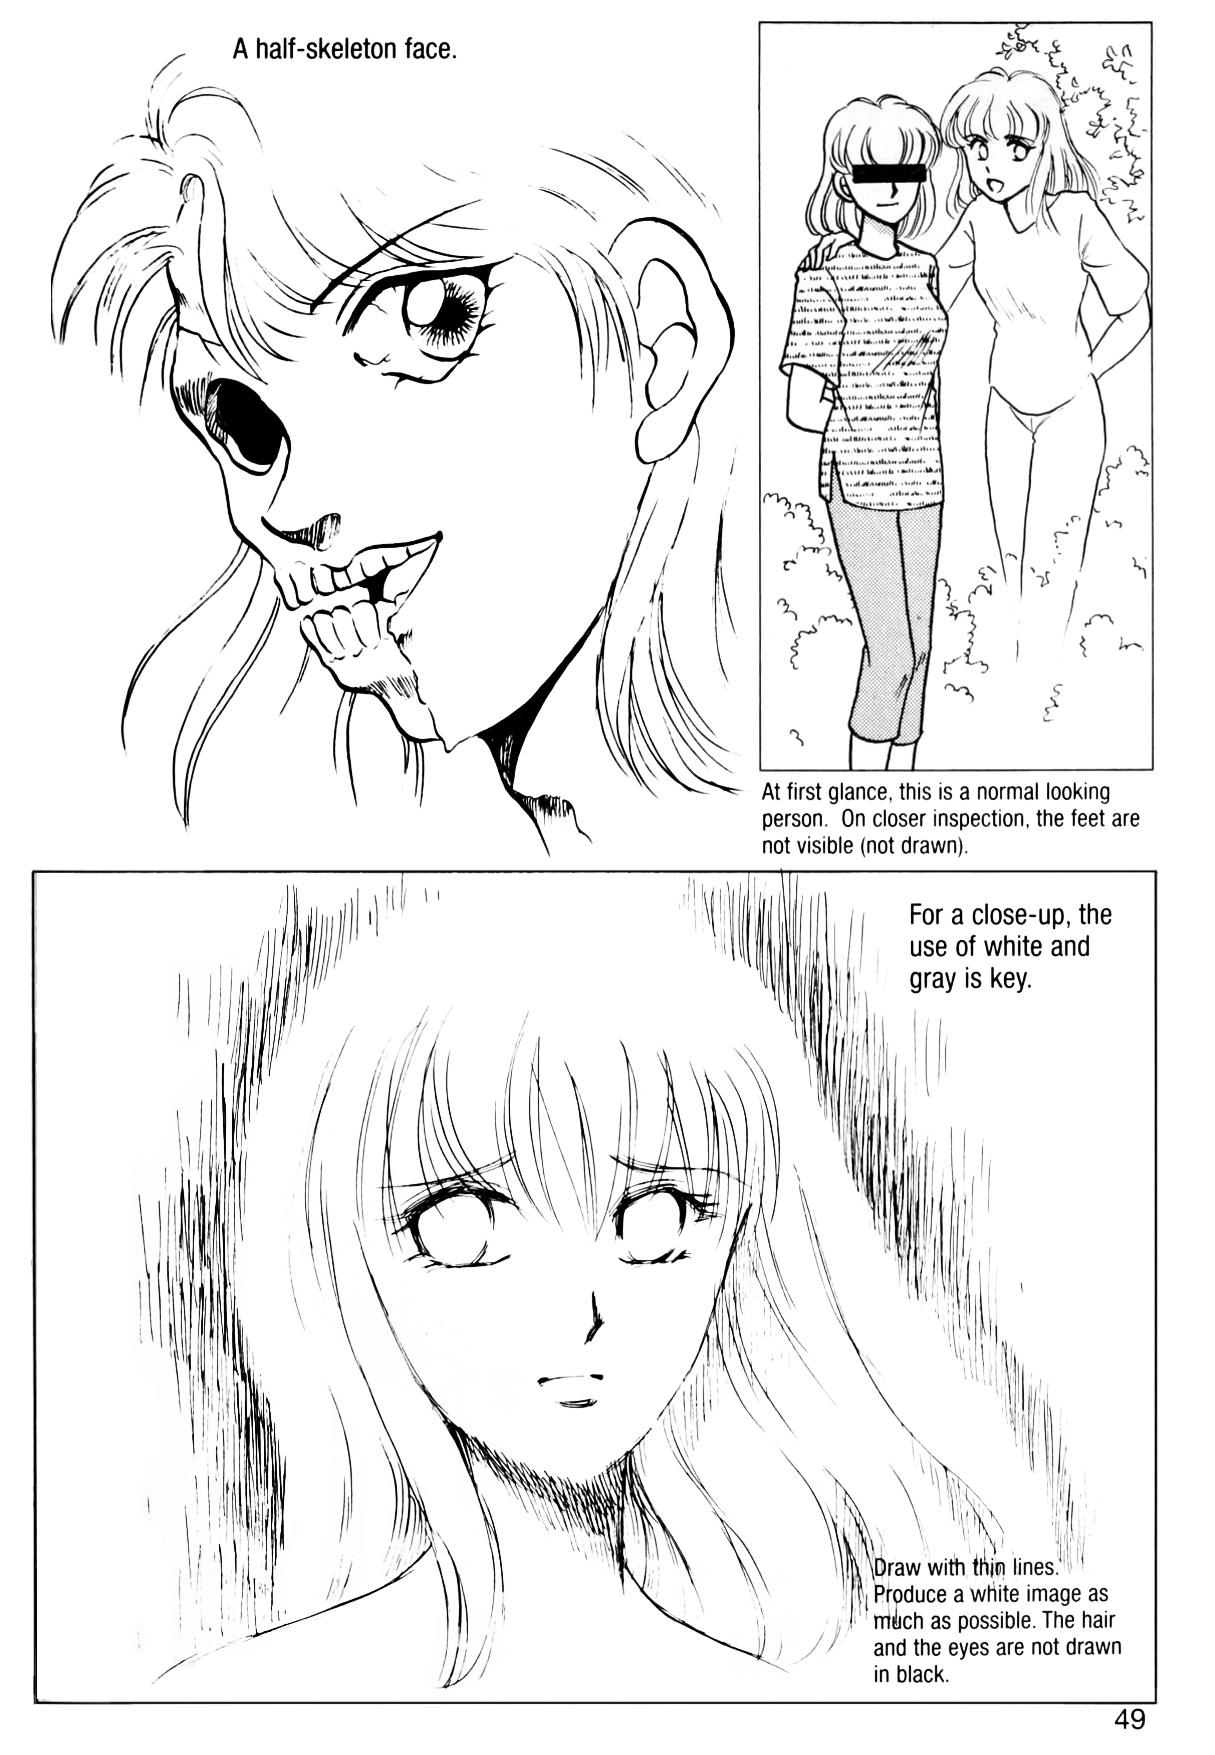 How to Draw Manga Vol. 24, Occult & Horror by Hikaru Hayashi 52